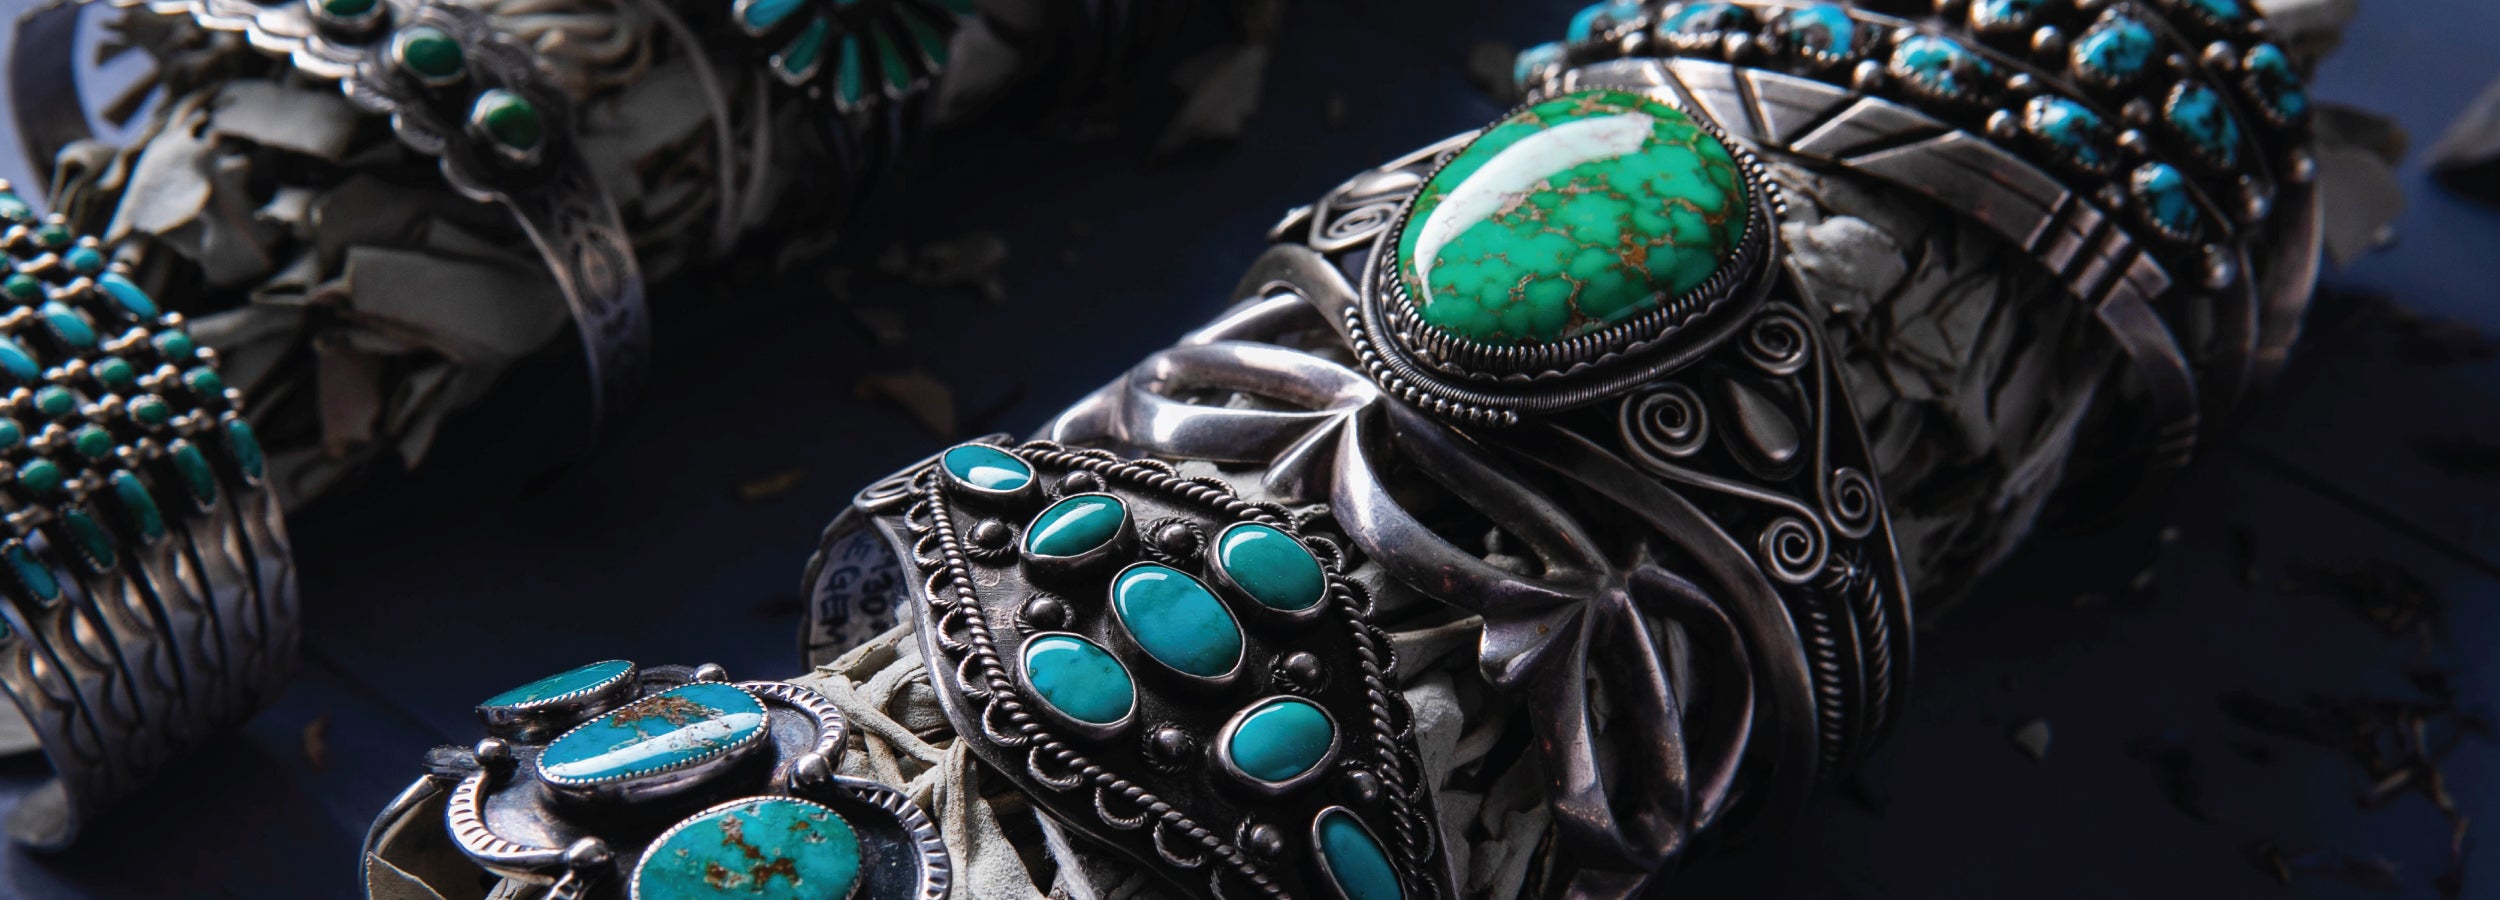 Peyote Bird Designs | Artisan Crafted Jewelry Since 1974